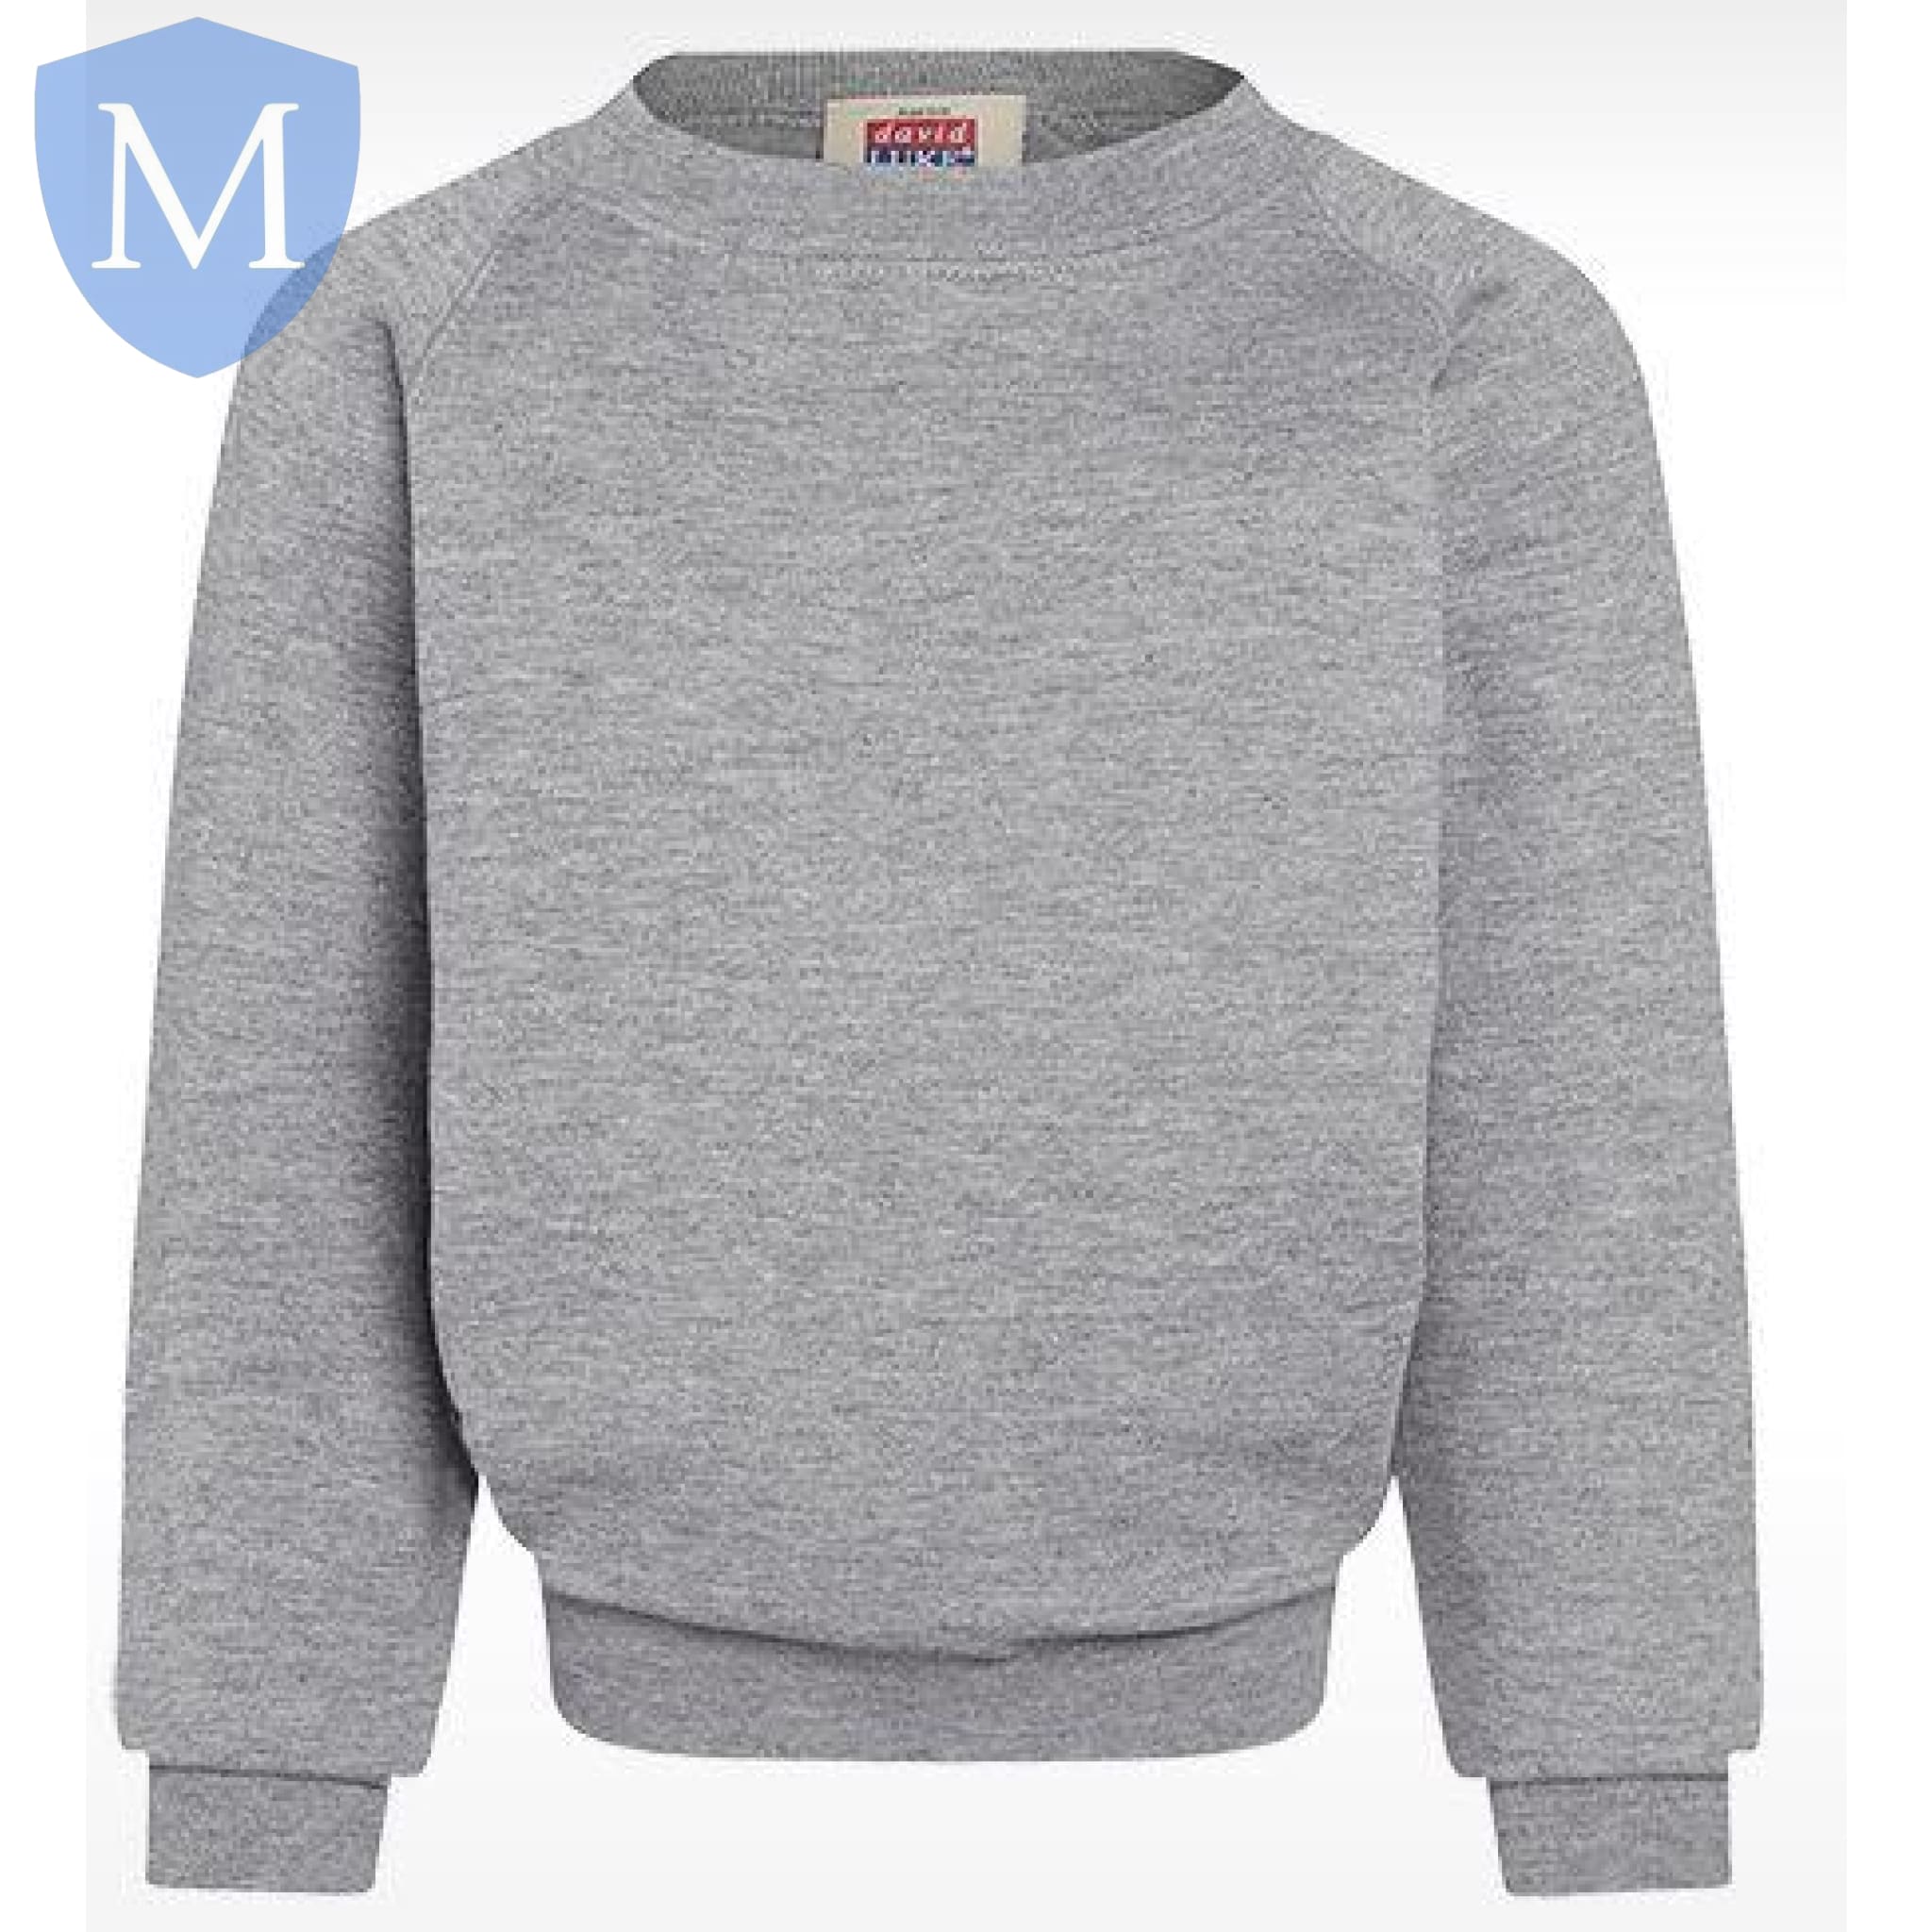 Plain Unisex Heavy-Duty Sweatshirt (Grey)